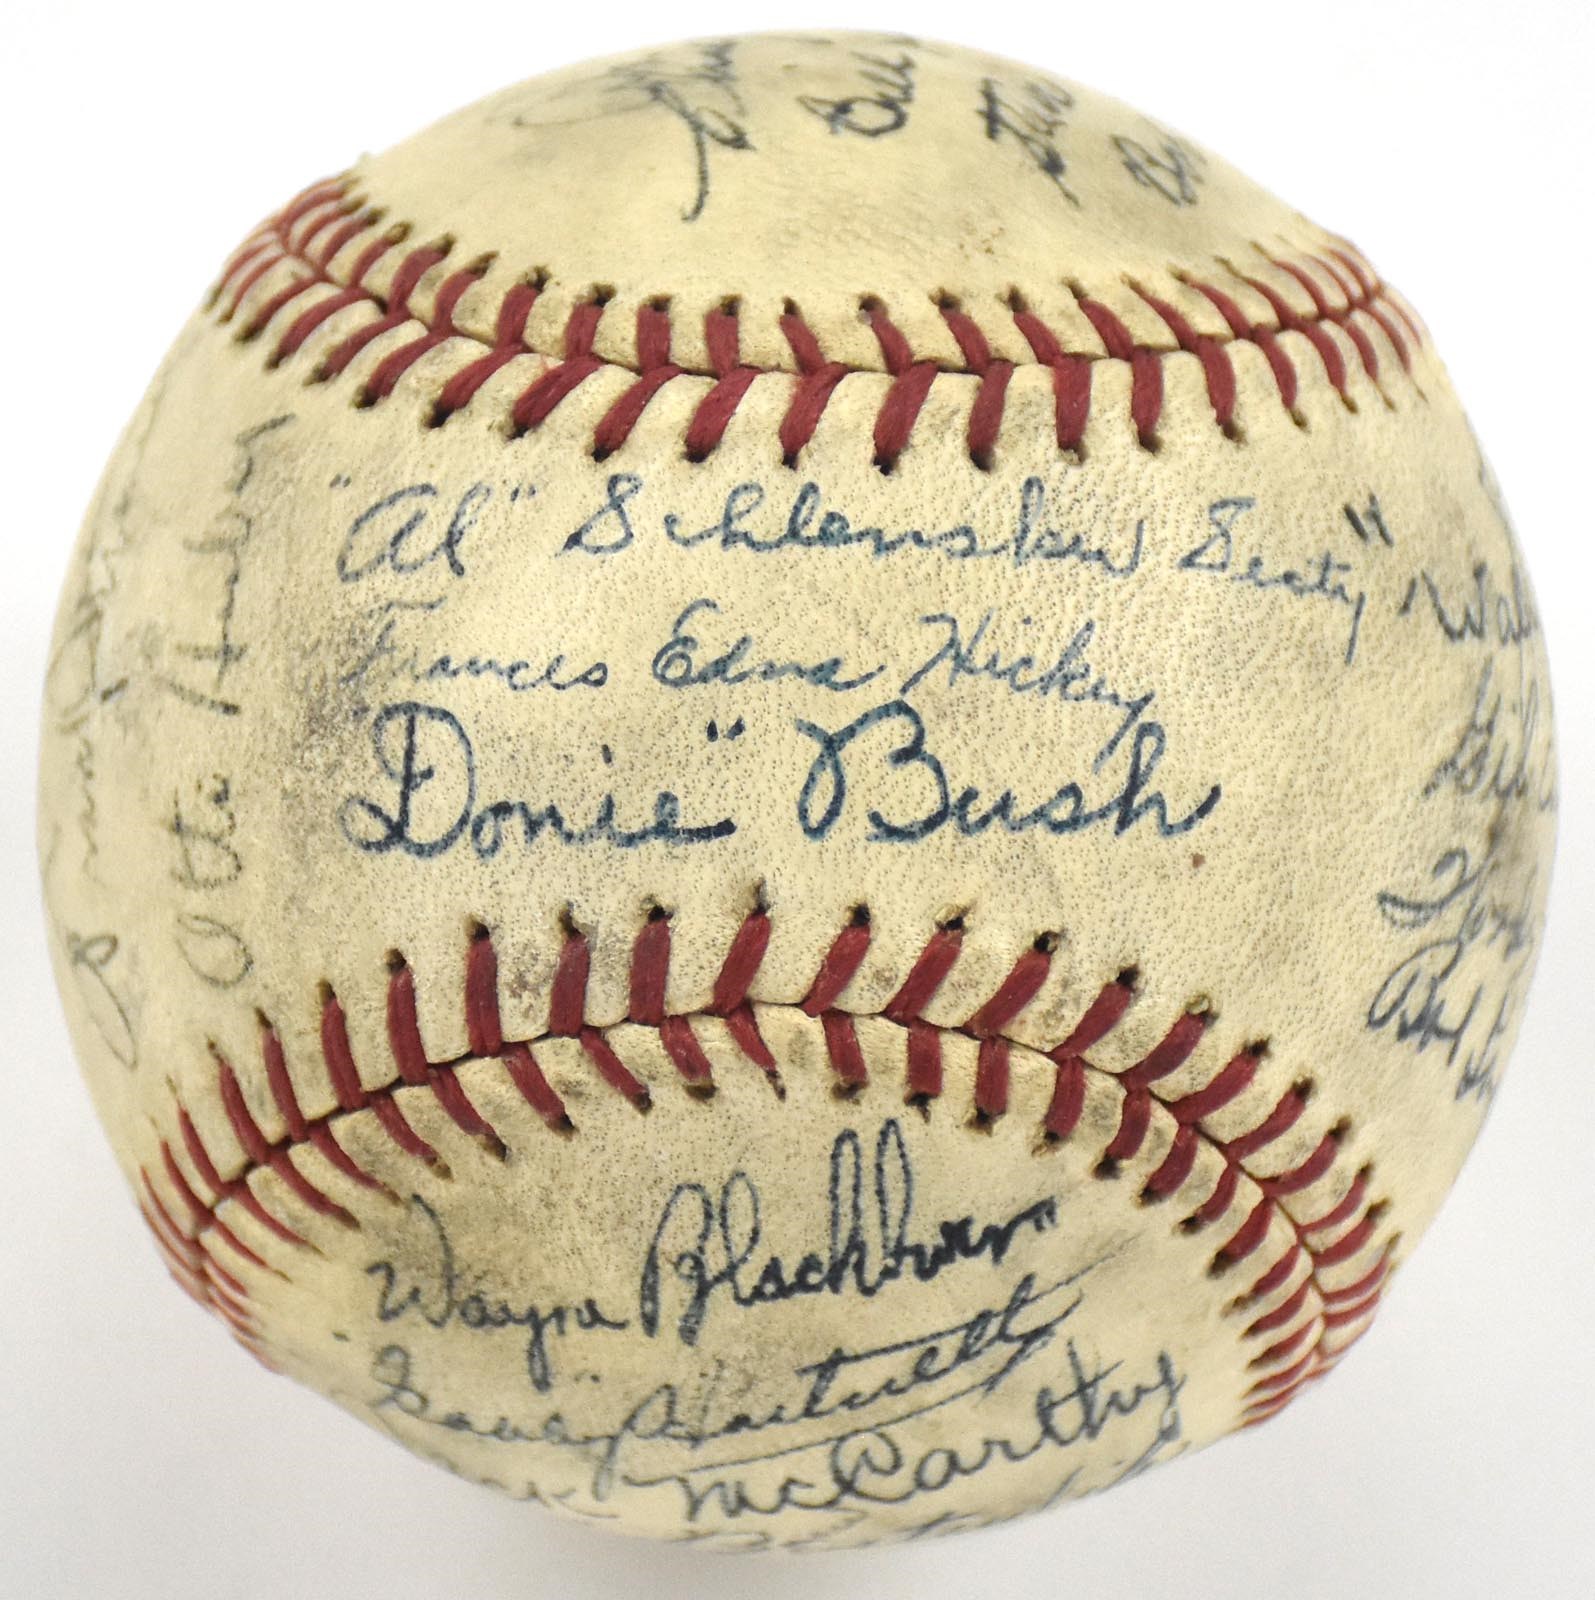 Baseball Autographs - 1942 Indianapolis Indians Team Signed Baseball with Gabby Hartnett and Donnie Bush